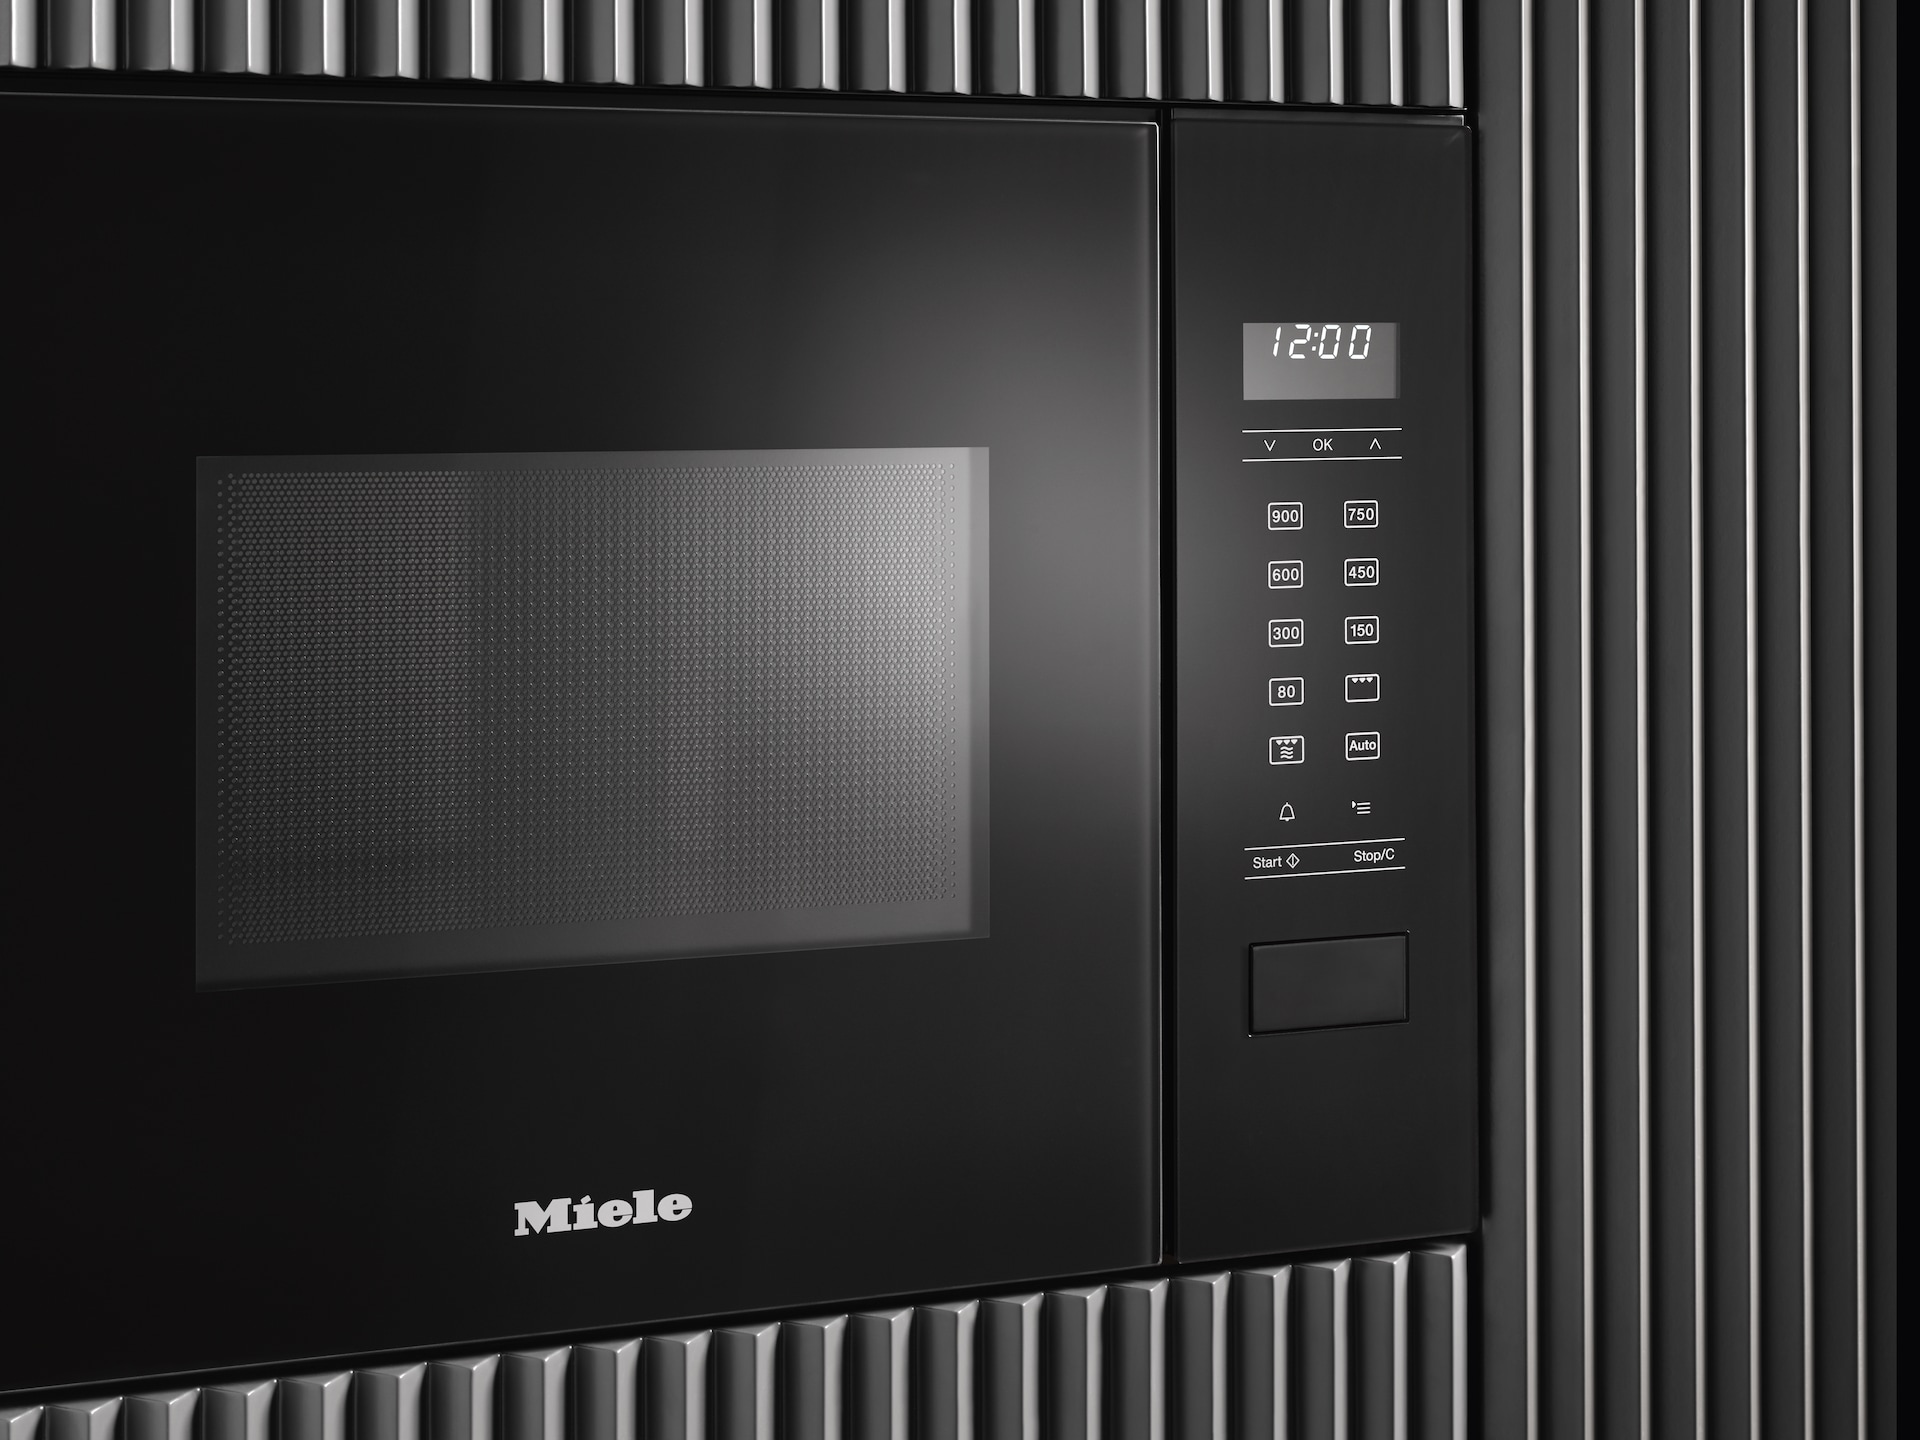 Microwave ovens - M 2234 SC Obsidian black - 3